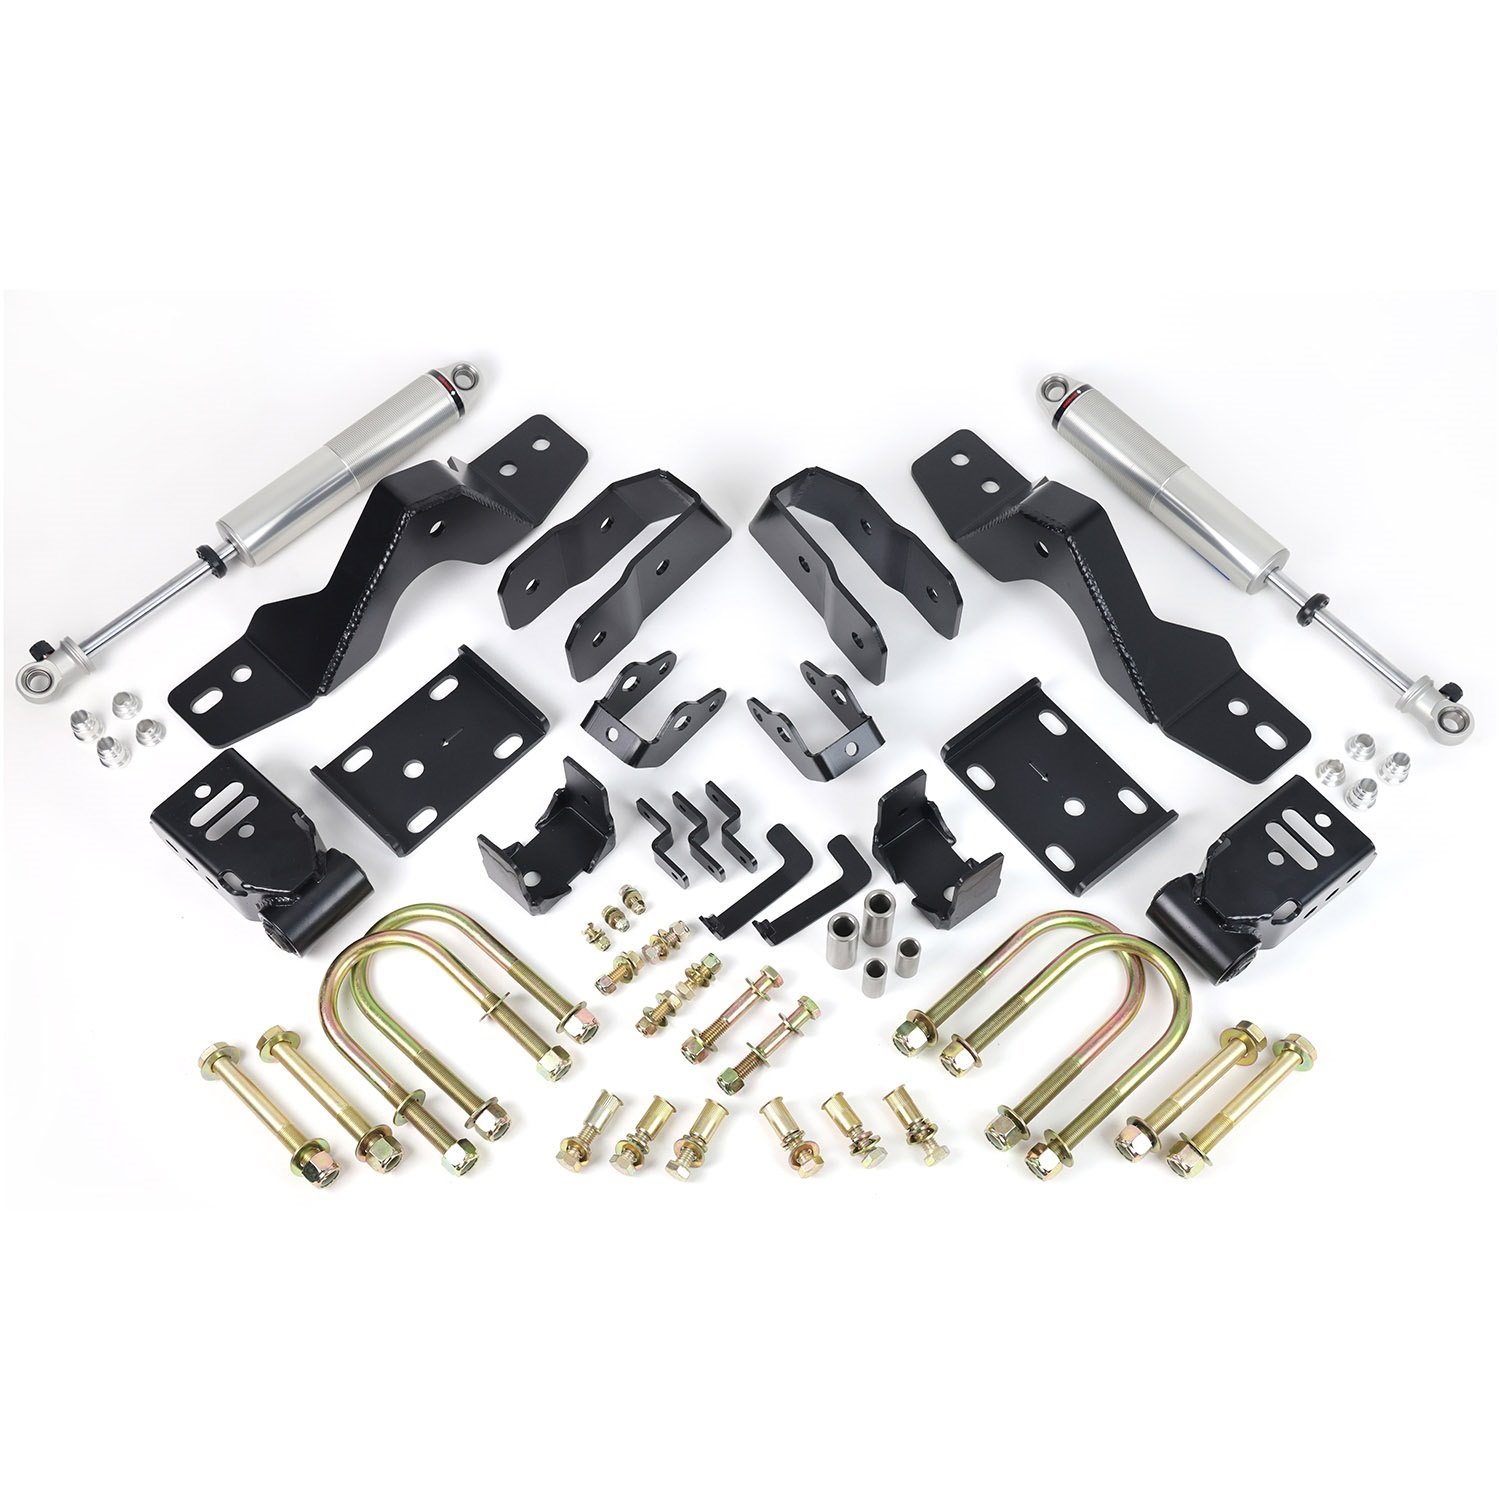 Rear Suspension Lowering Kit Fits Select Chevy Silverado, GMC Sierra 1500 Trucks